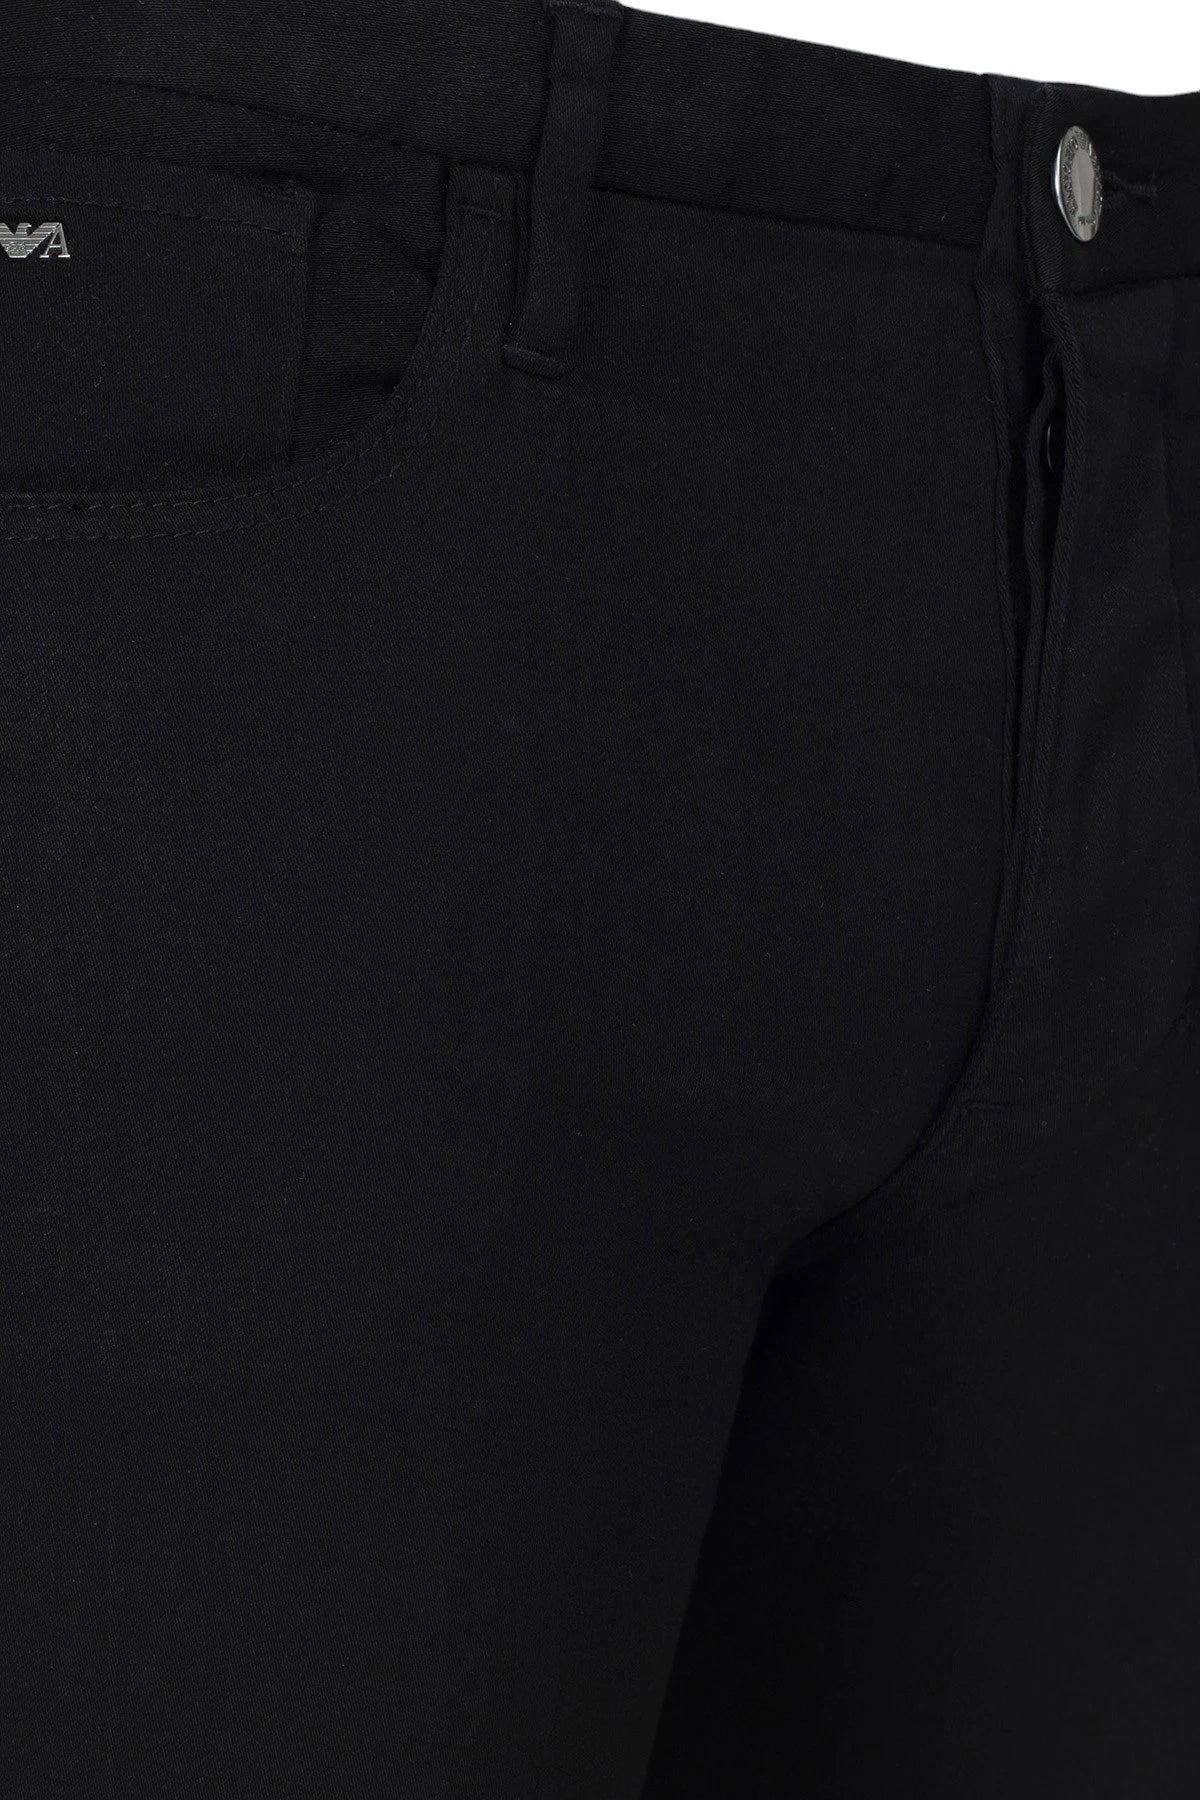 Pantalone nero J11 Skinny fit w38-Emporio Armani-Pantaloni-Vittorio Citro Boutique